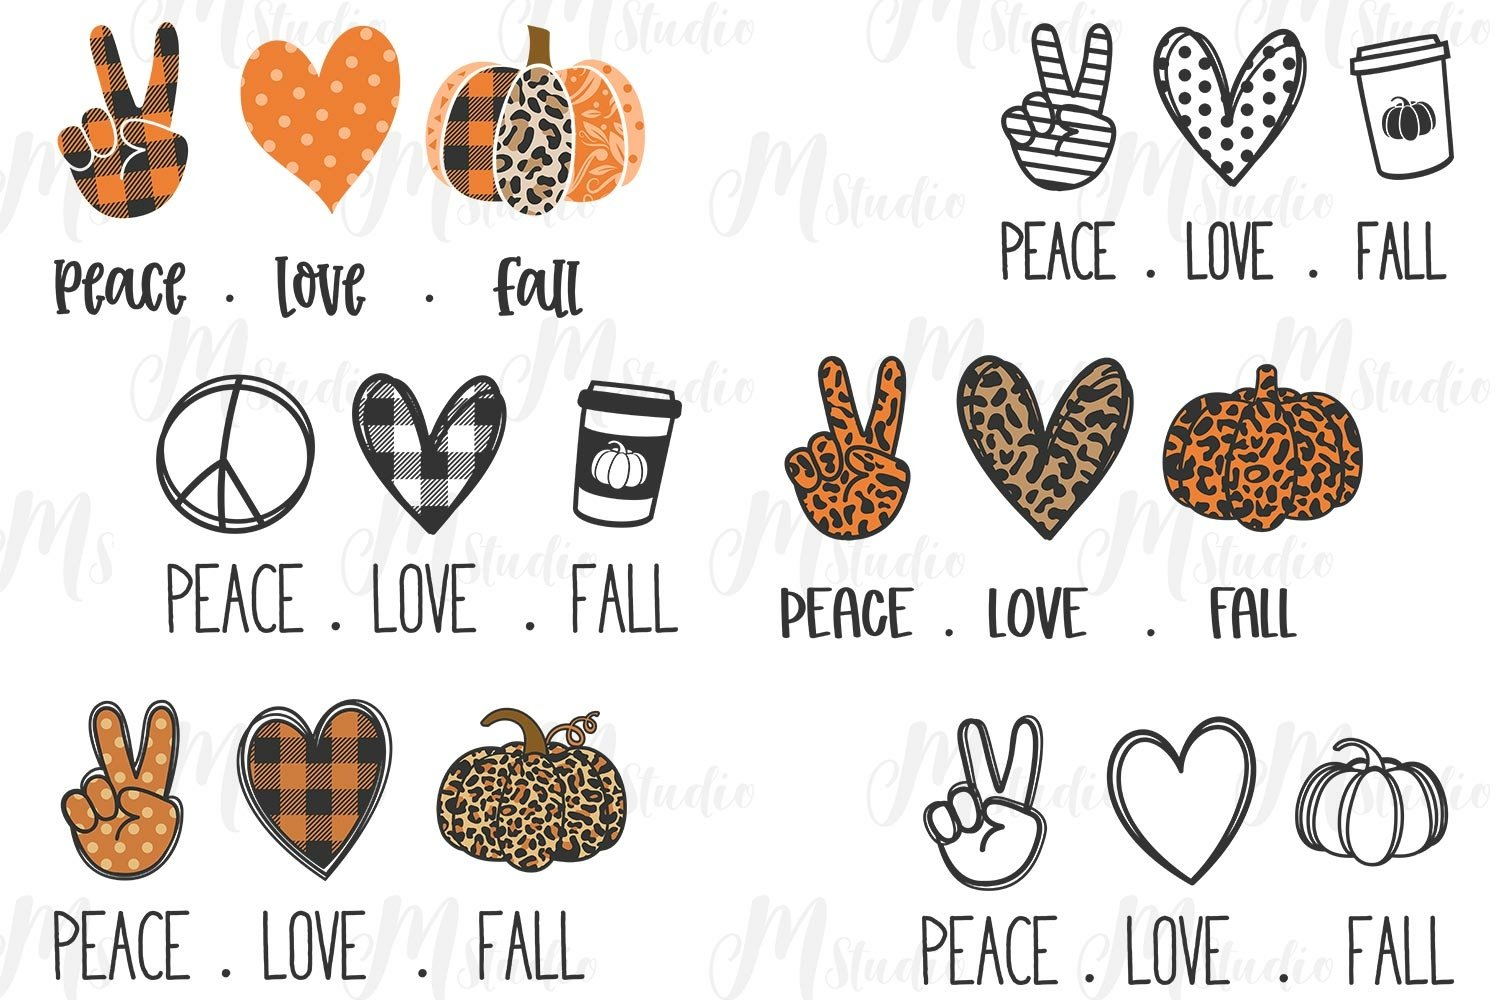 Peace & Love & Fall.